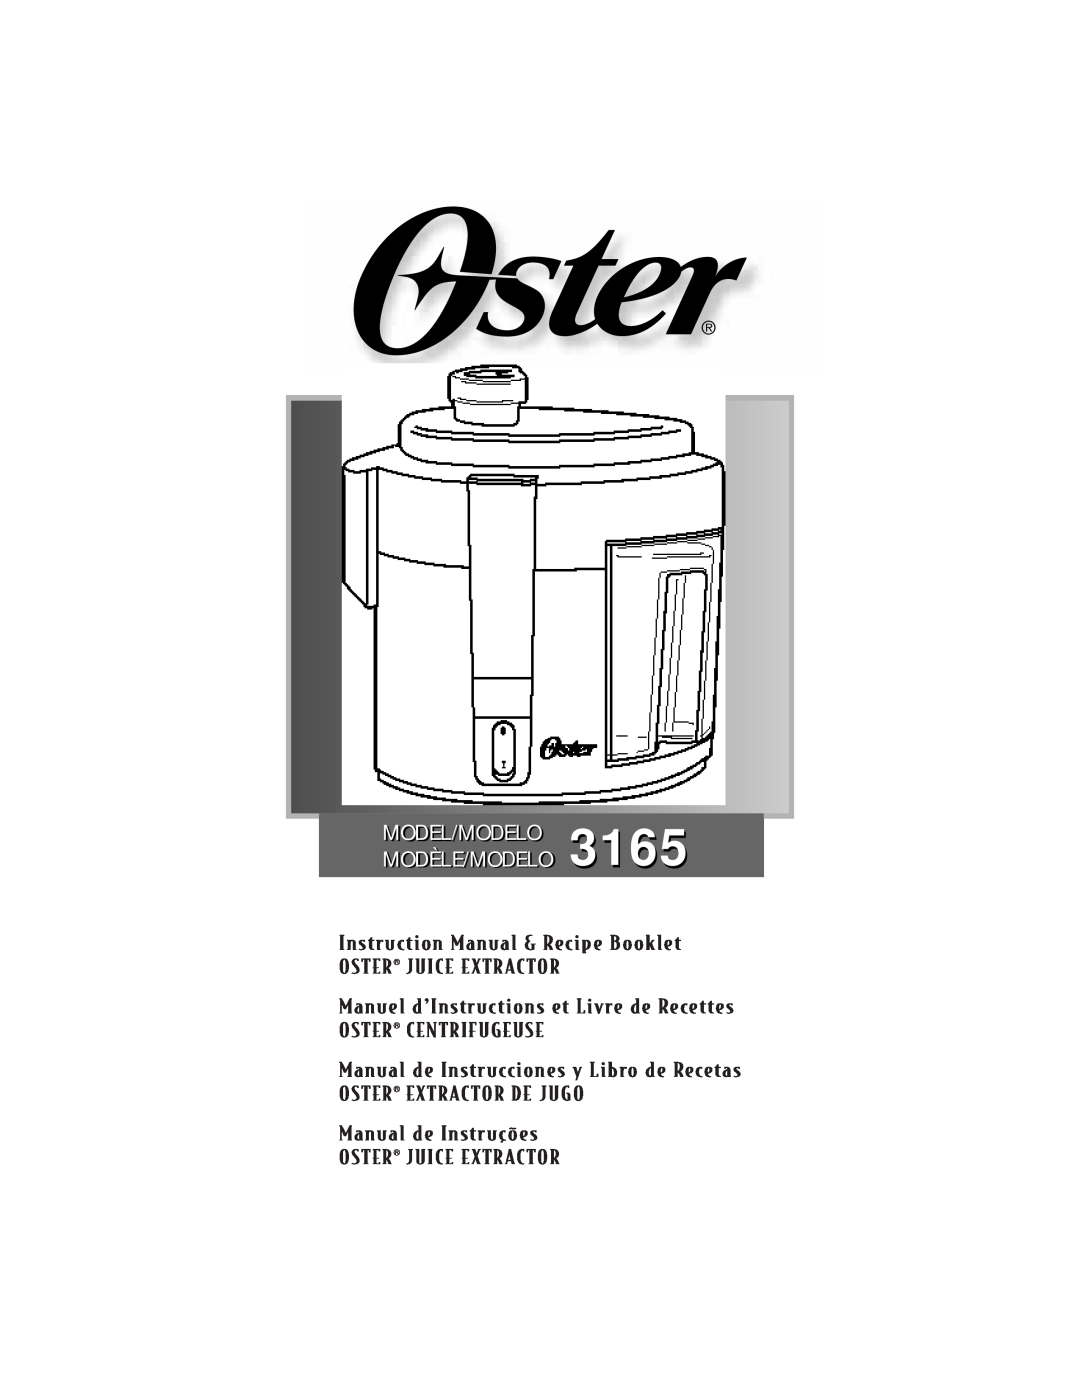 Oster instruction manual MODEL/MODELO 3165 MODÈLE/MODELO, Oster Juice Extractor, Oster Centrifugeuse 